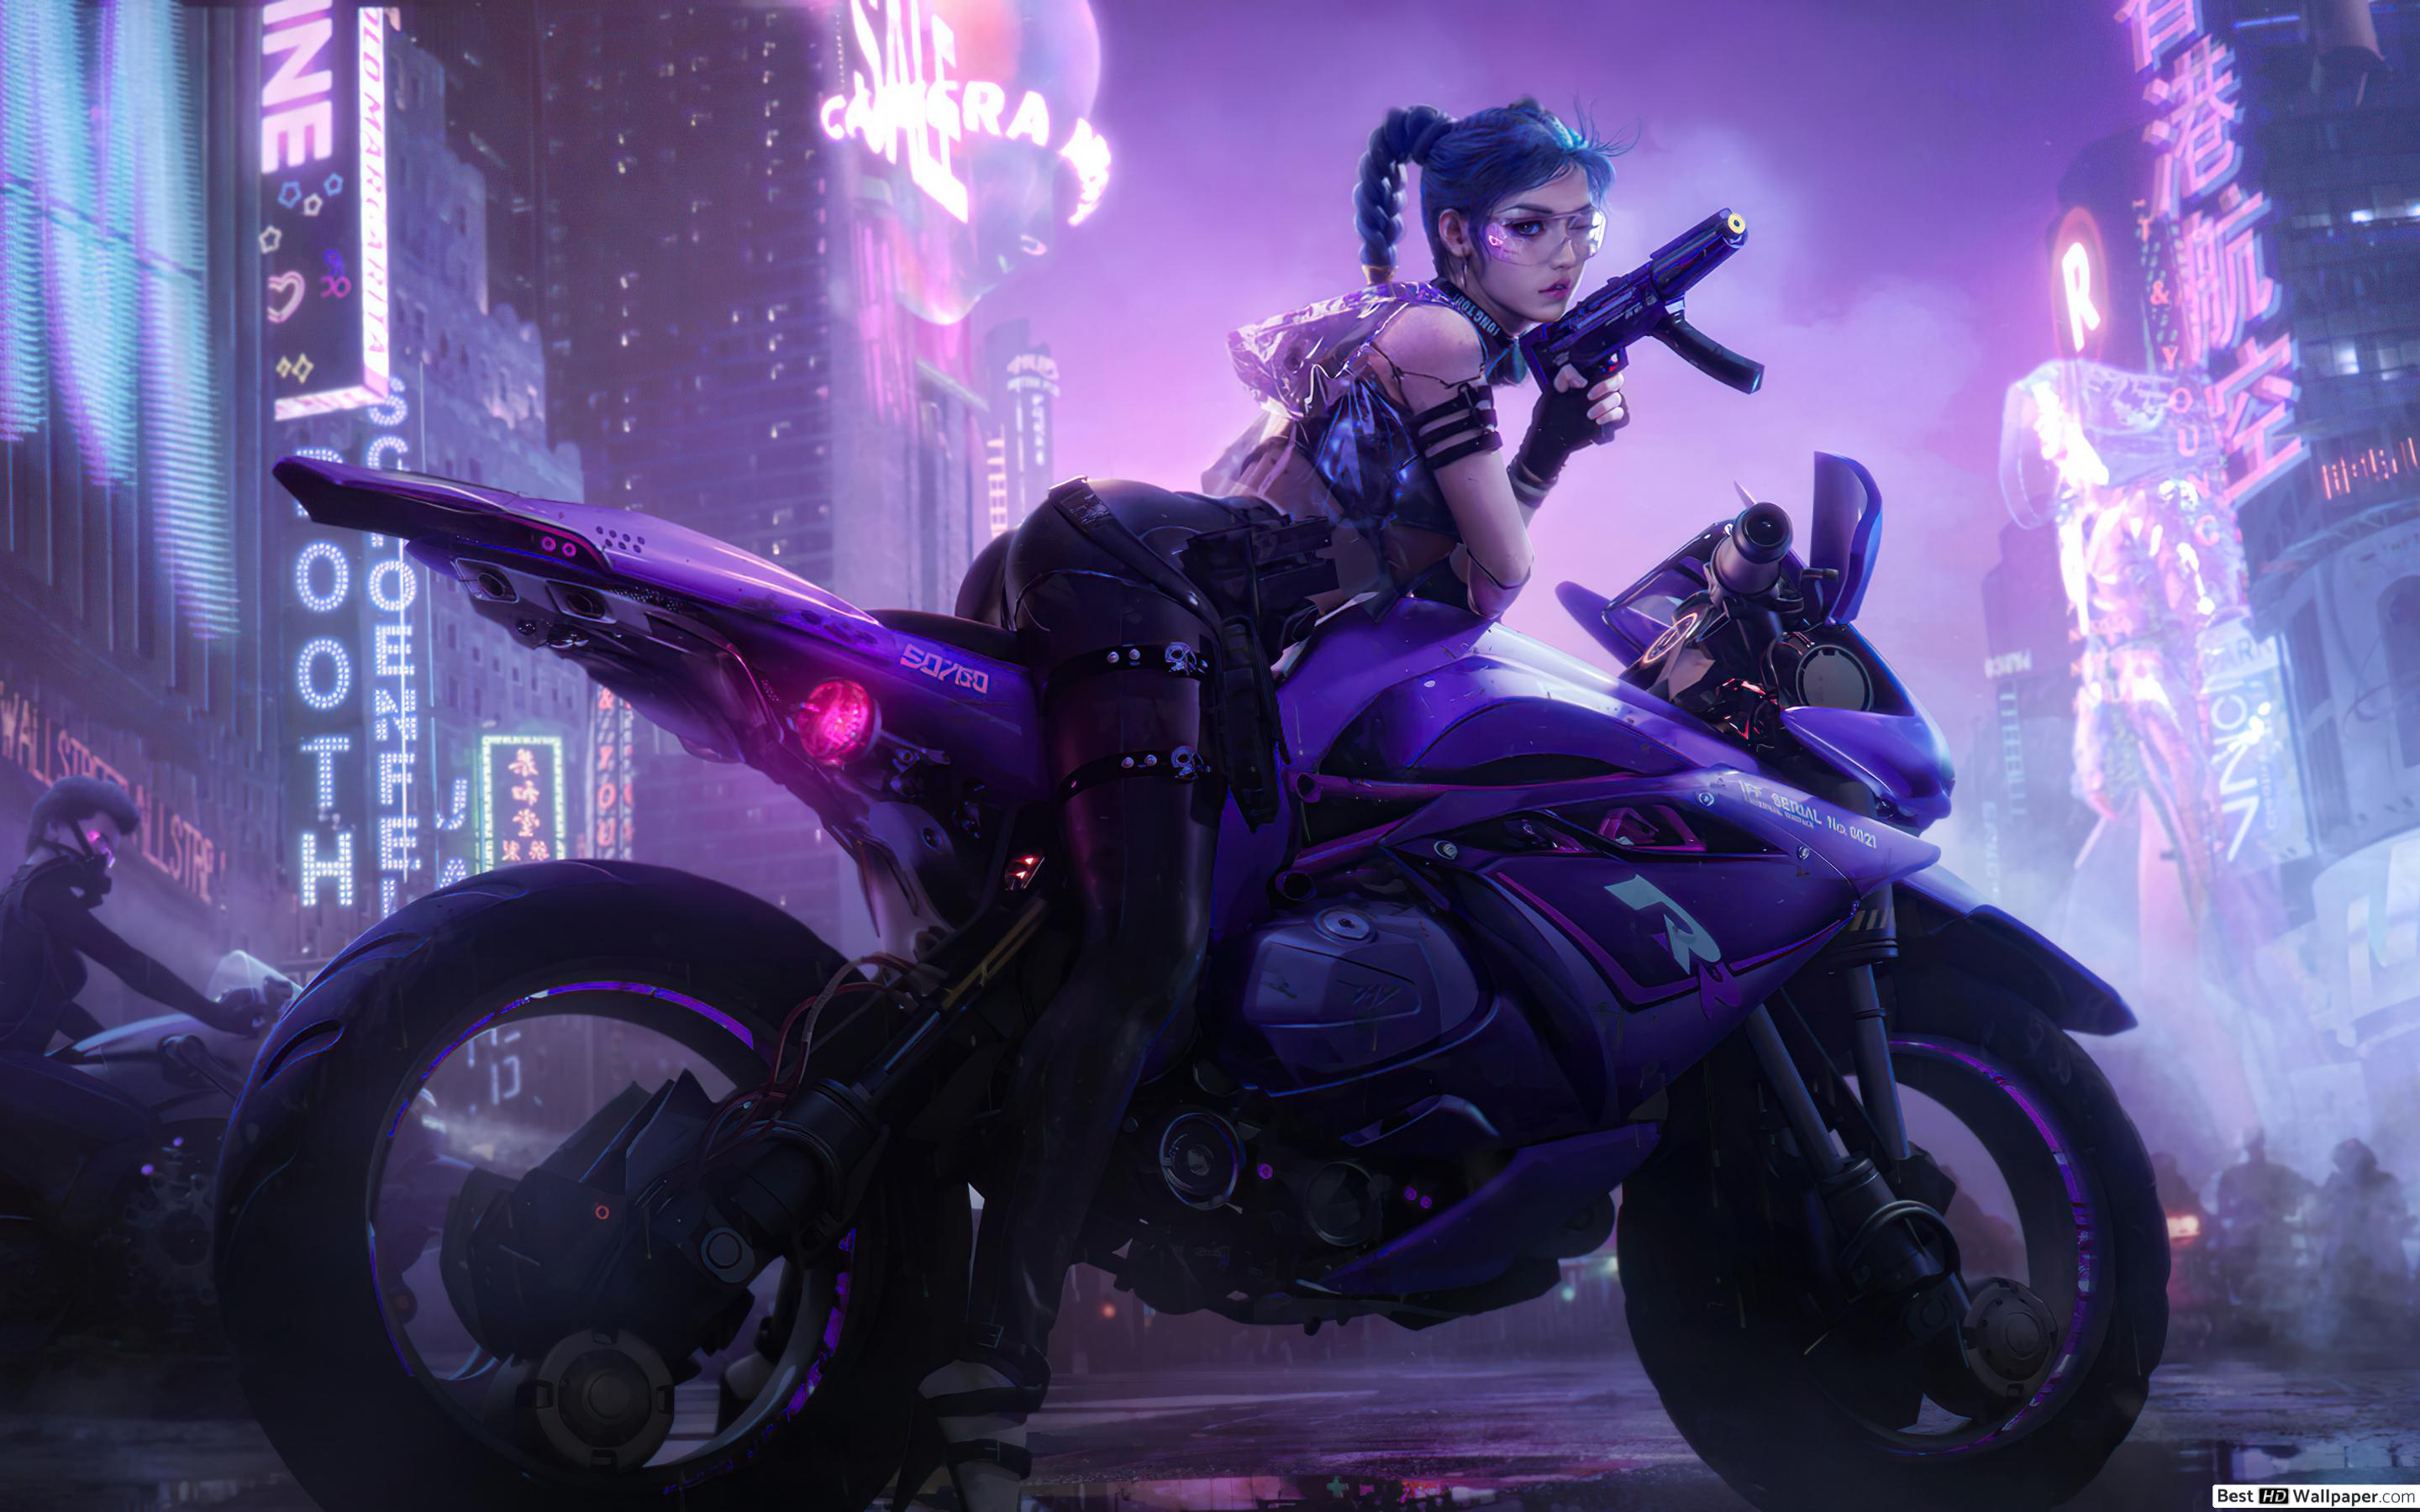 Cyborg Biker Girl (Cyberpunk Art) HD wallpaper download